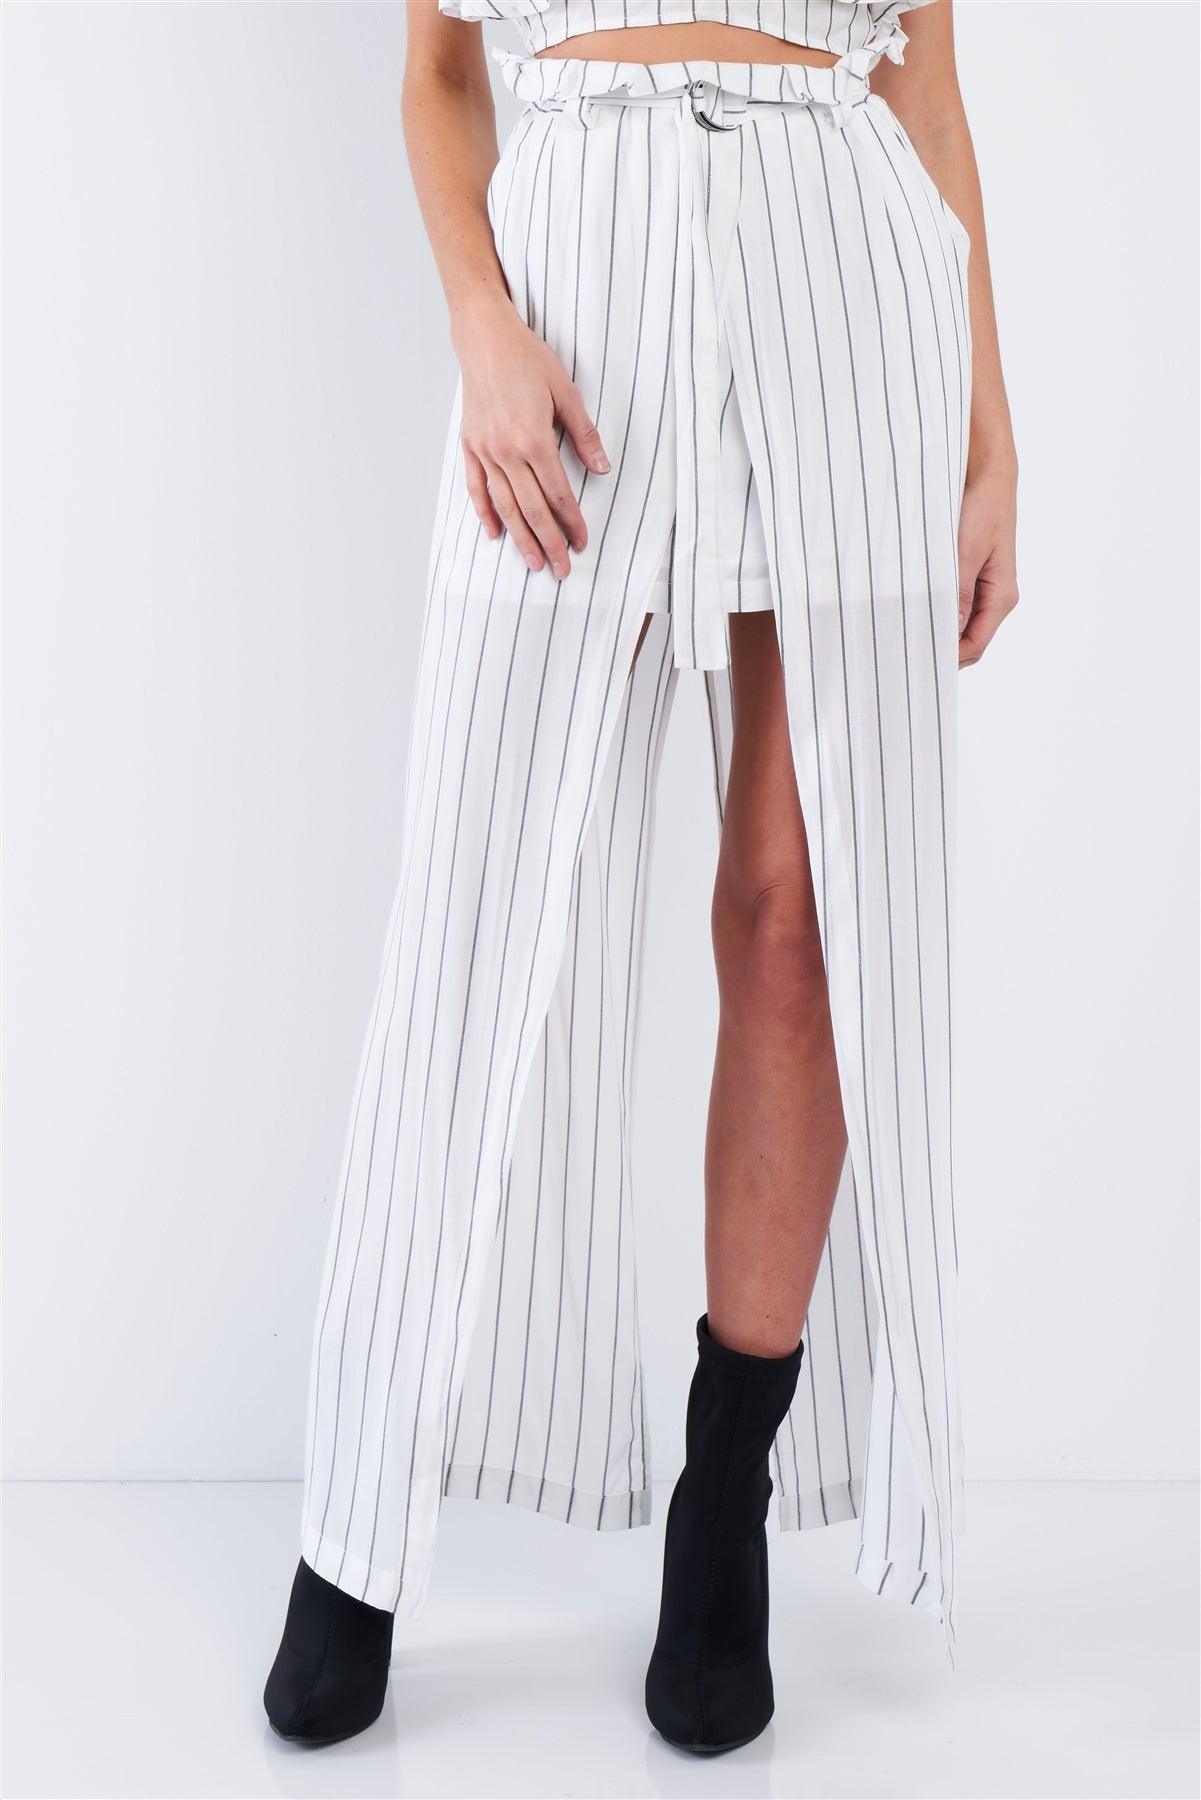 White & Grey Stripe Halter Crop Top and High Waist Frill Mock Maxi Skirt Skort Set    /1-3-2